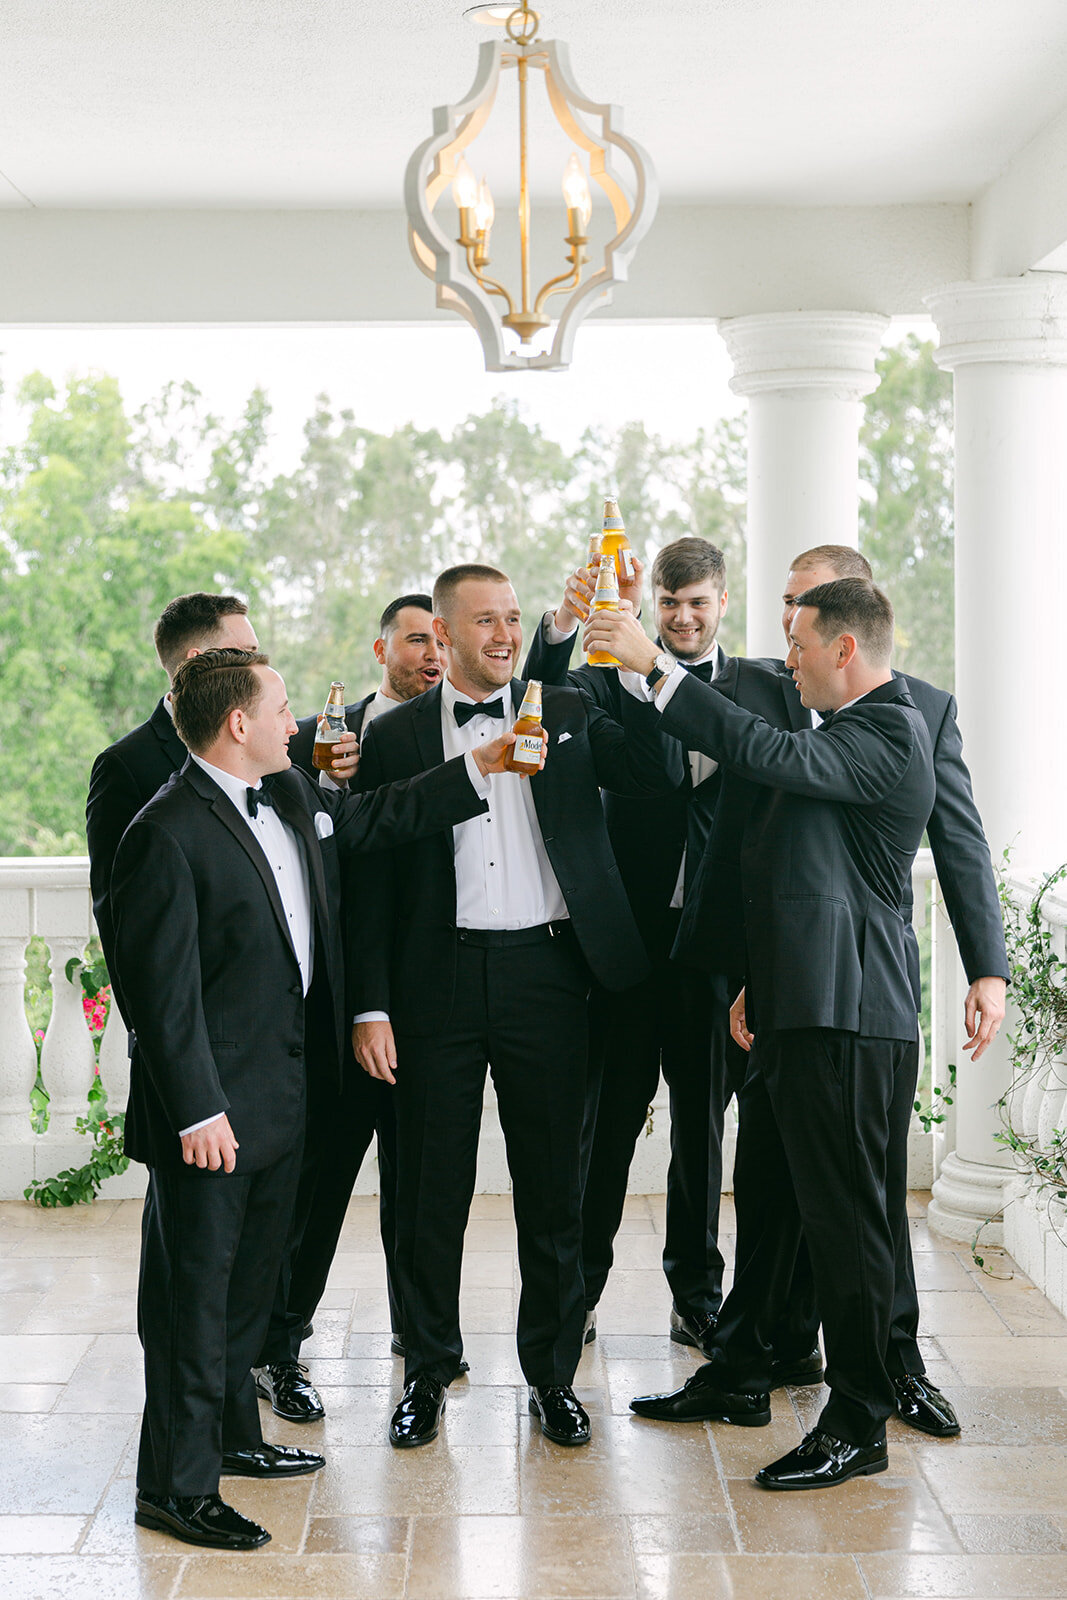 CORNELIA ZAISS PHOTOGRAPHY LEAH + ROBERT'S WEDDING 0164_websize